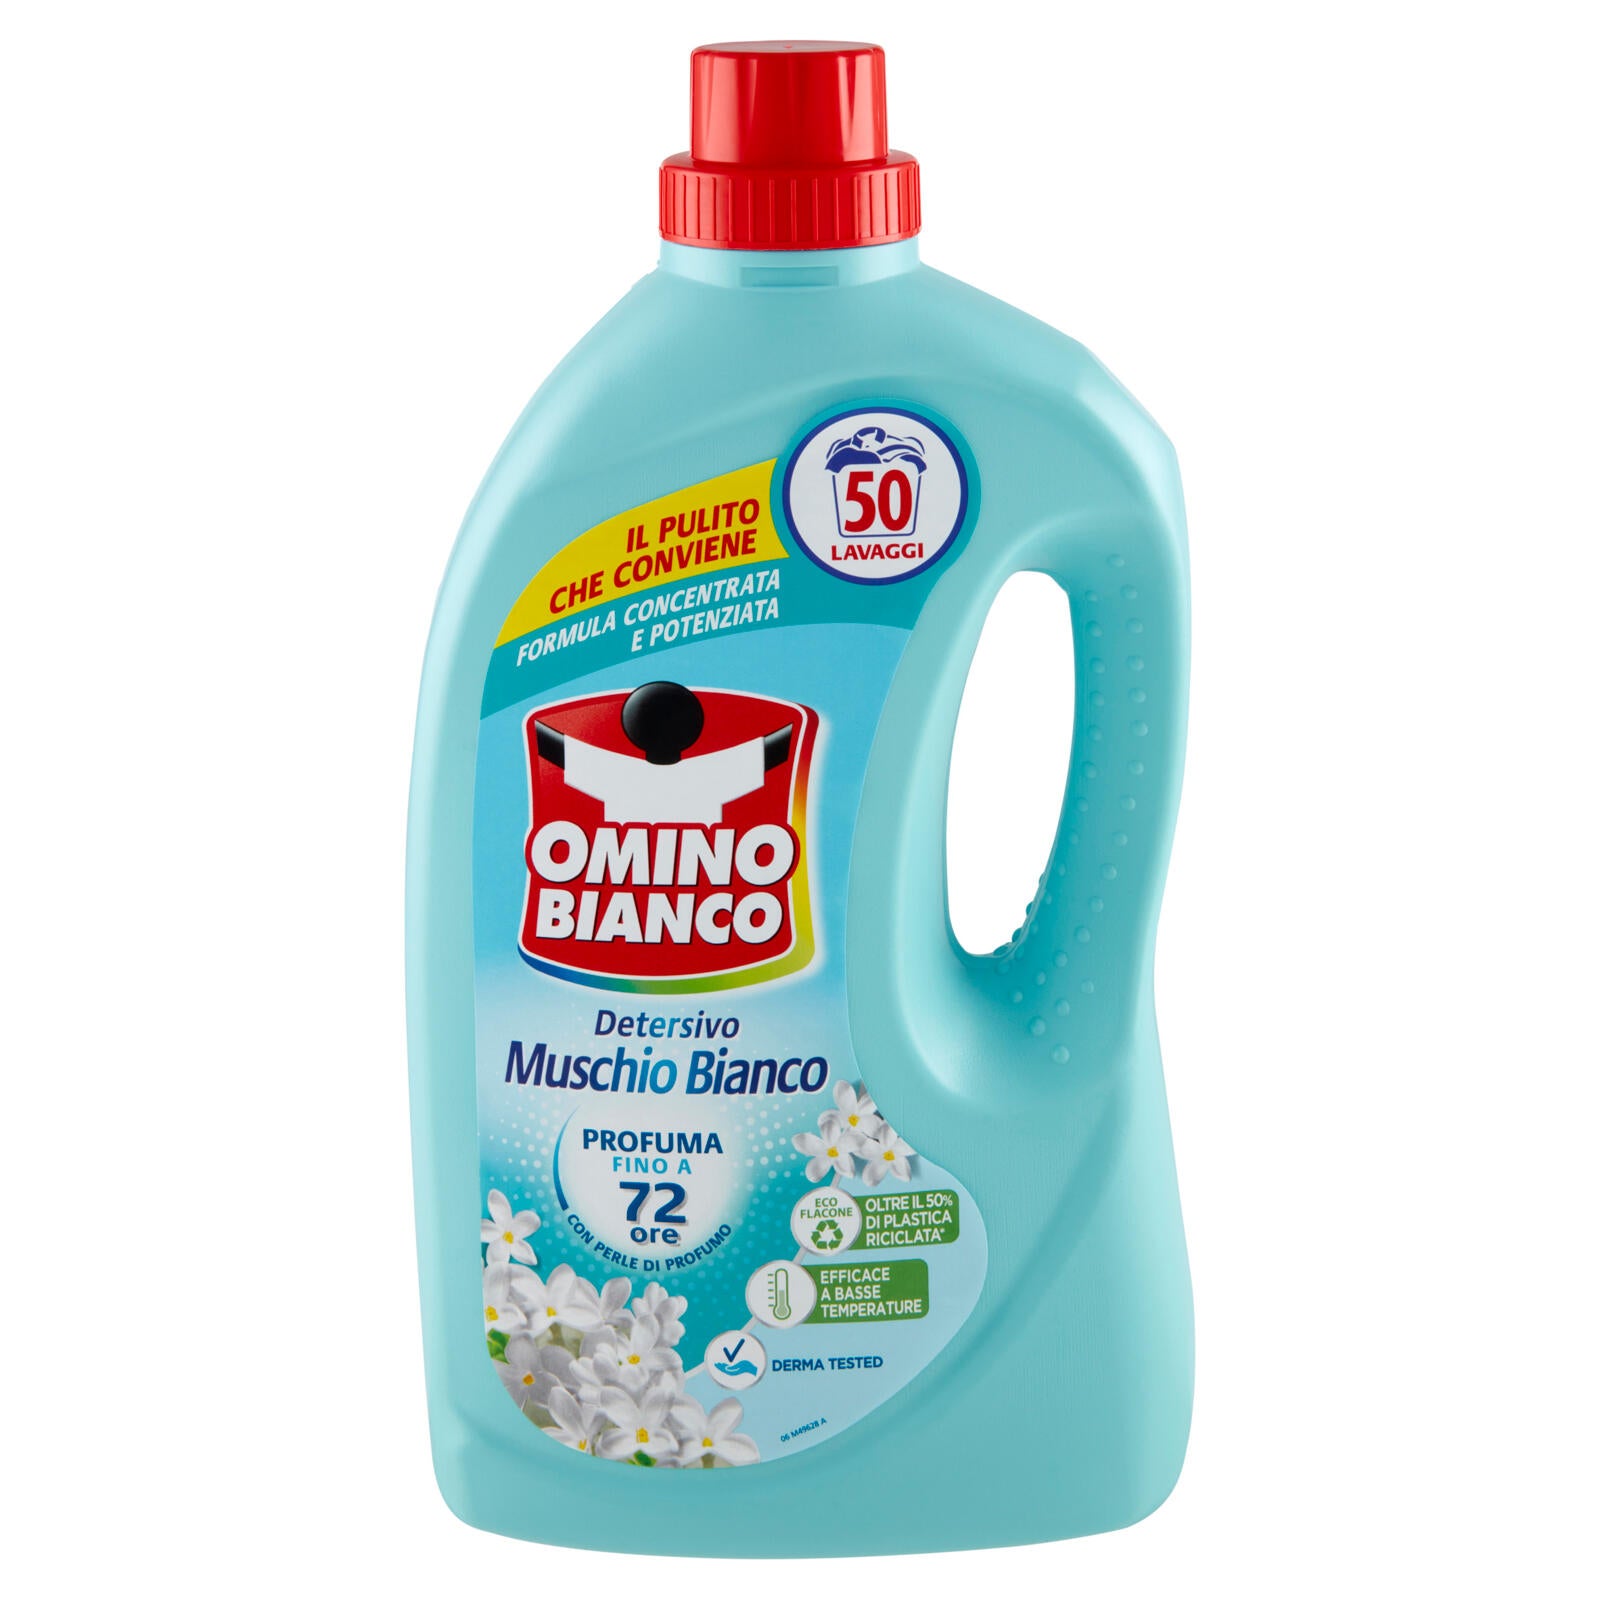 Omino Bianco Detersivo Lavatrice Liquido Muschio Bianco 50 Lavaggi 2000 ml  ->